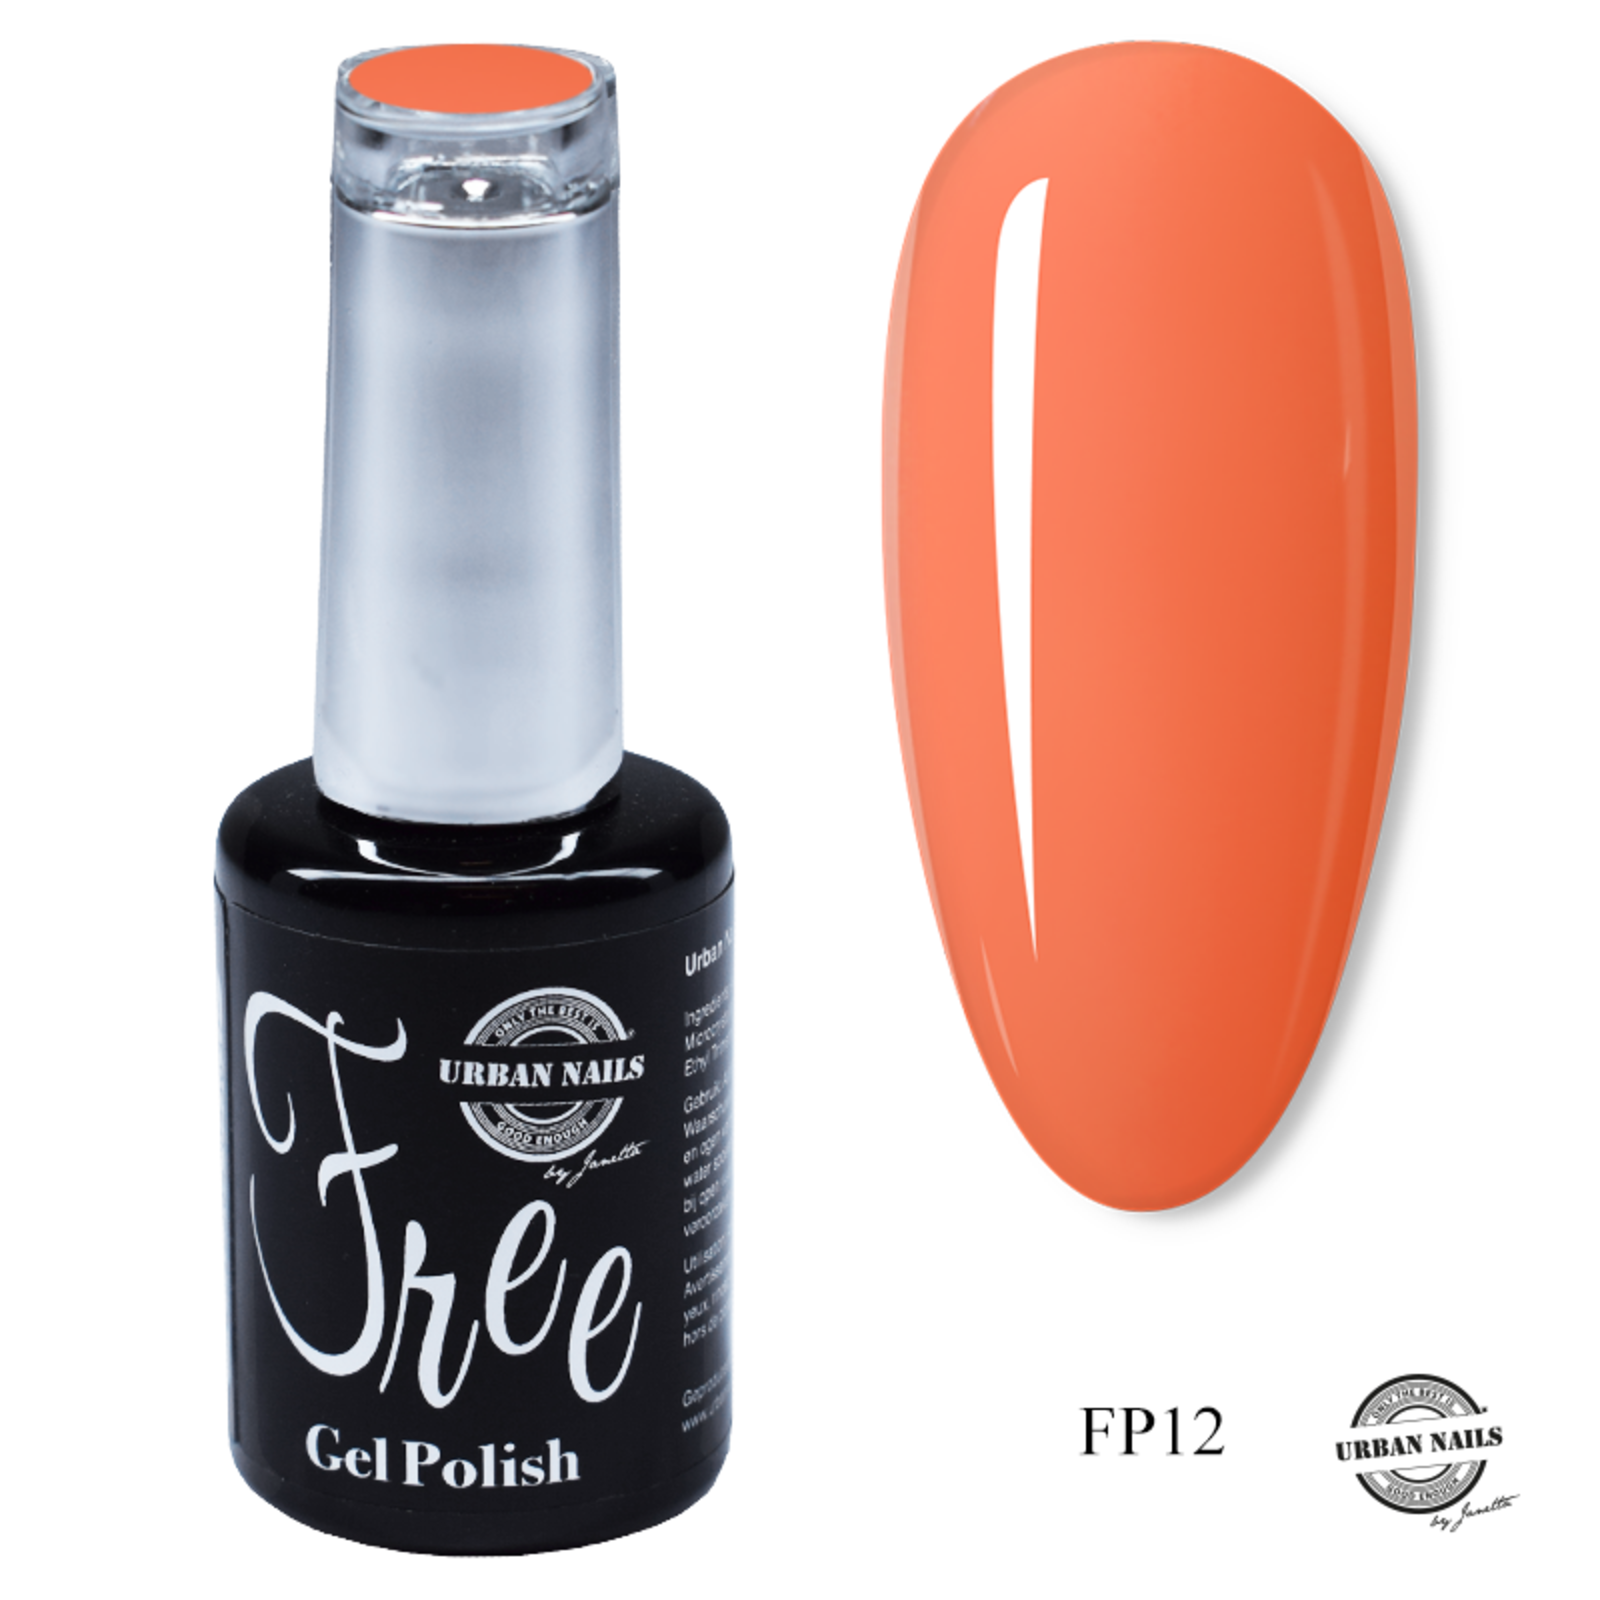 Urban nails Free Gelpolish FP12